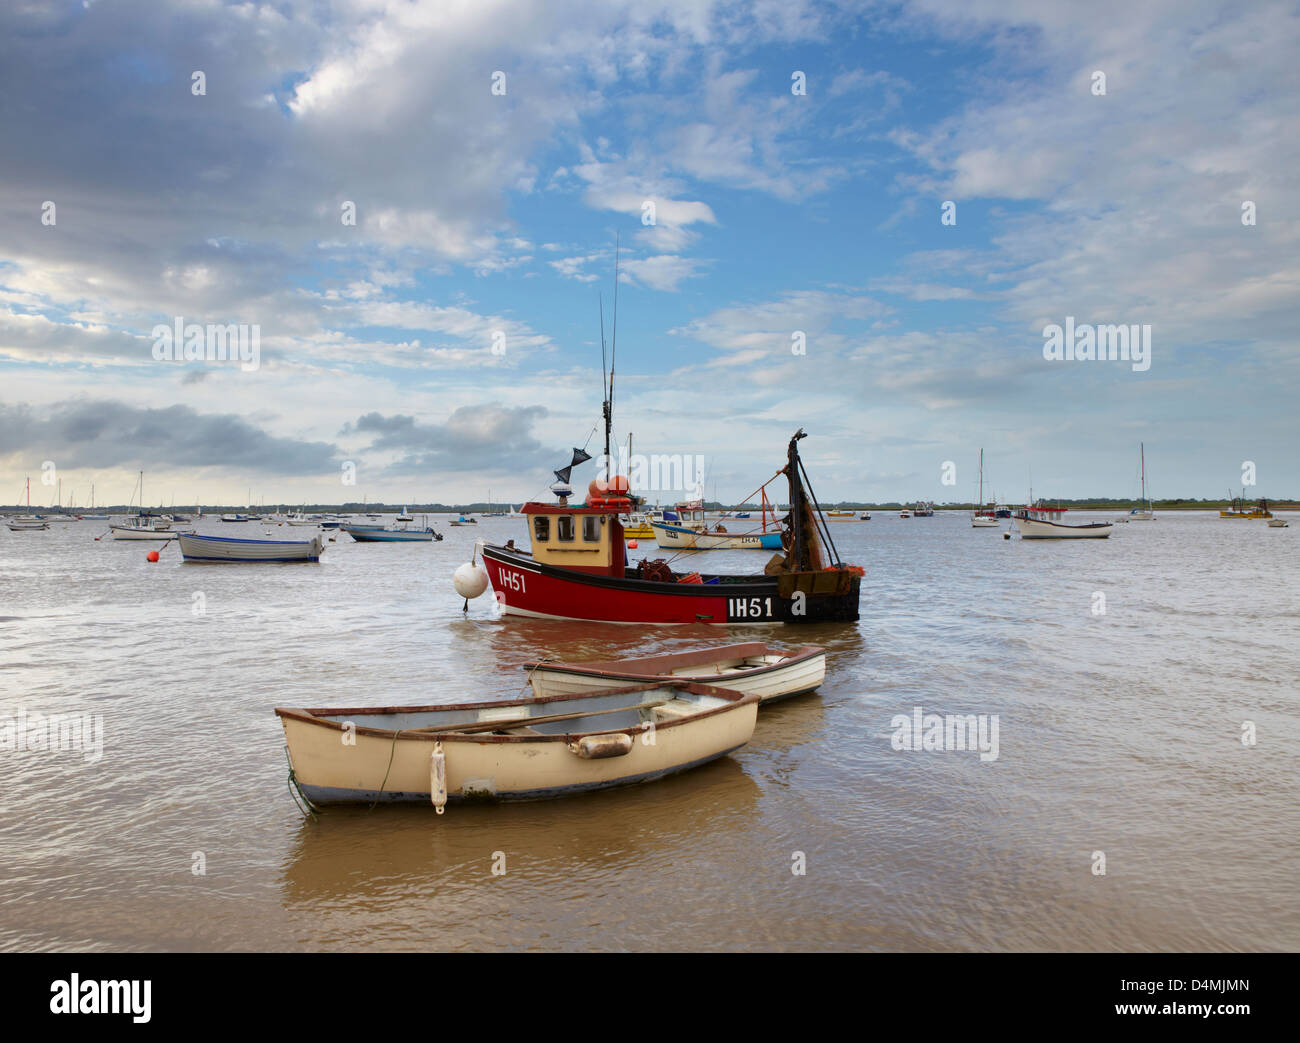 A scene from Felixstowe Ferry by the River Debben in Suffolk, England Stock Photo